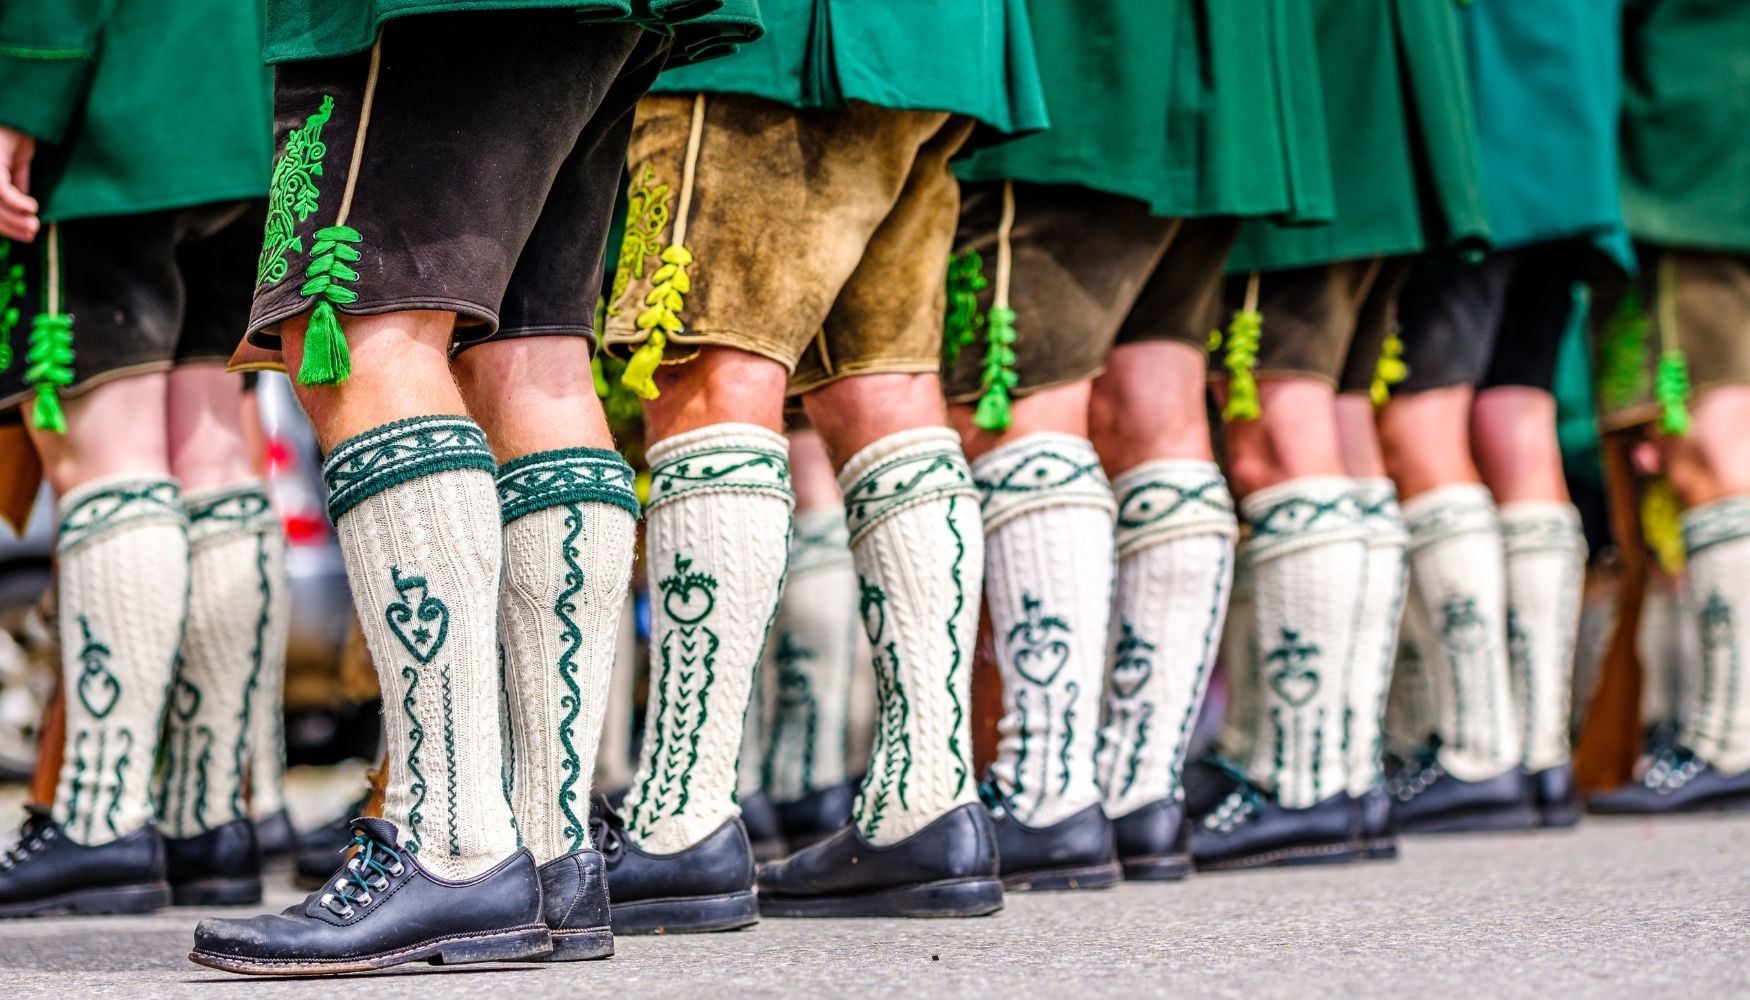 Bavarian haferl shoes